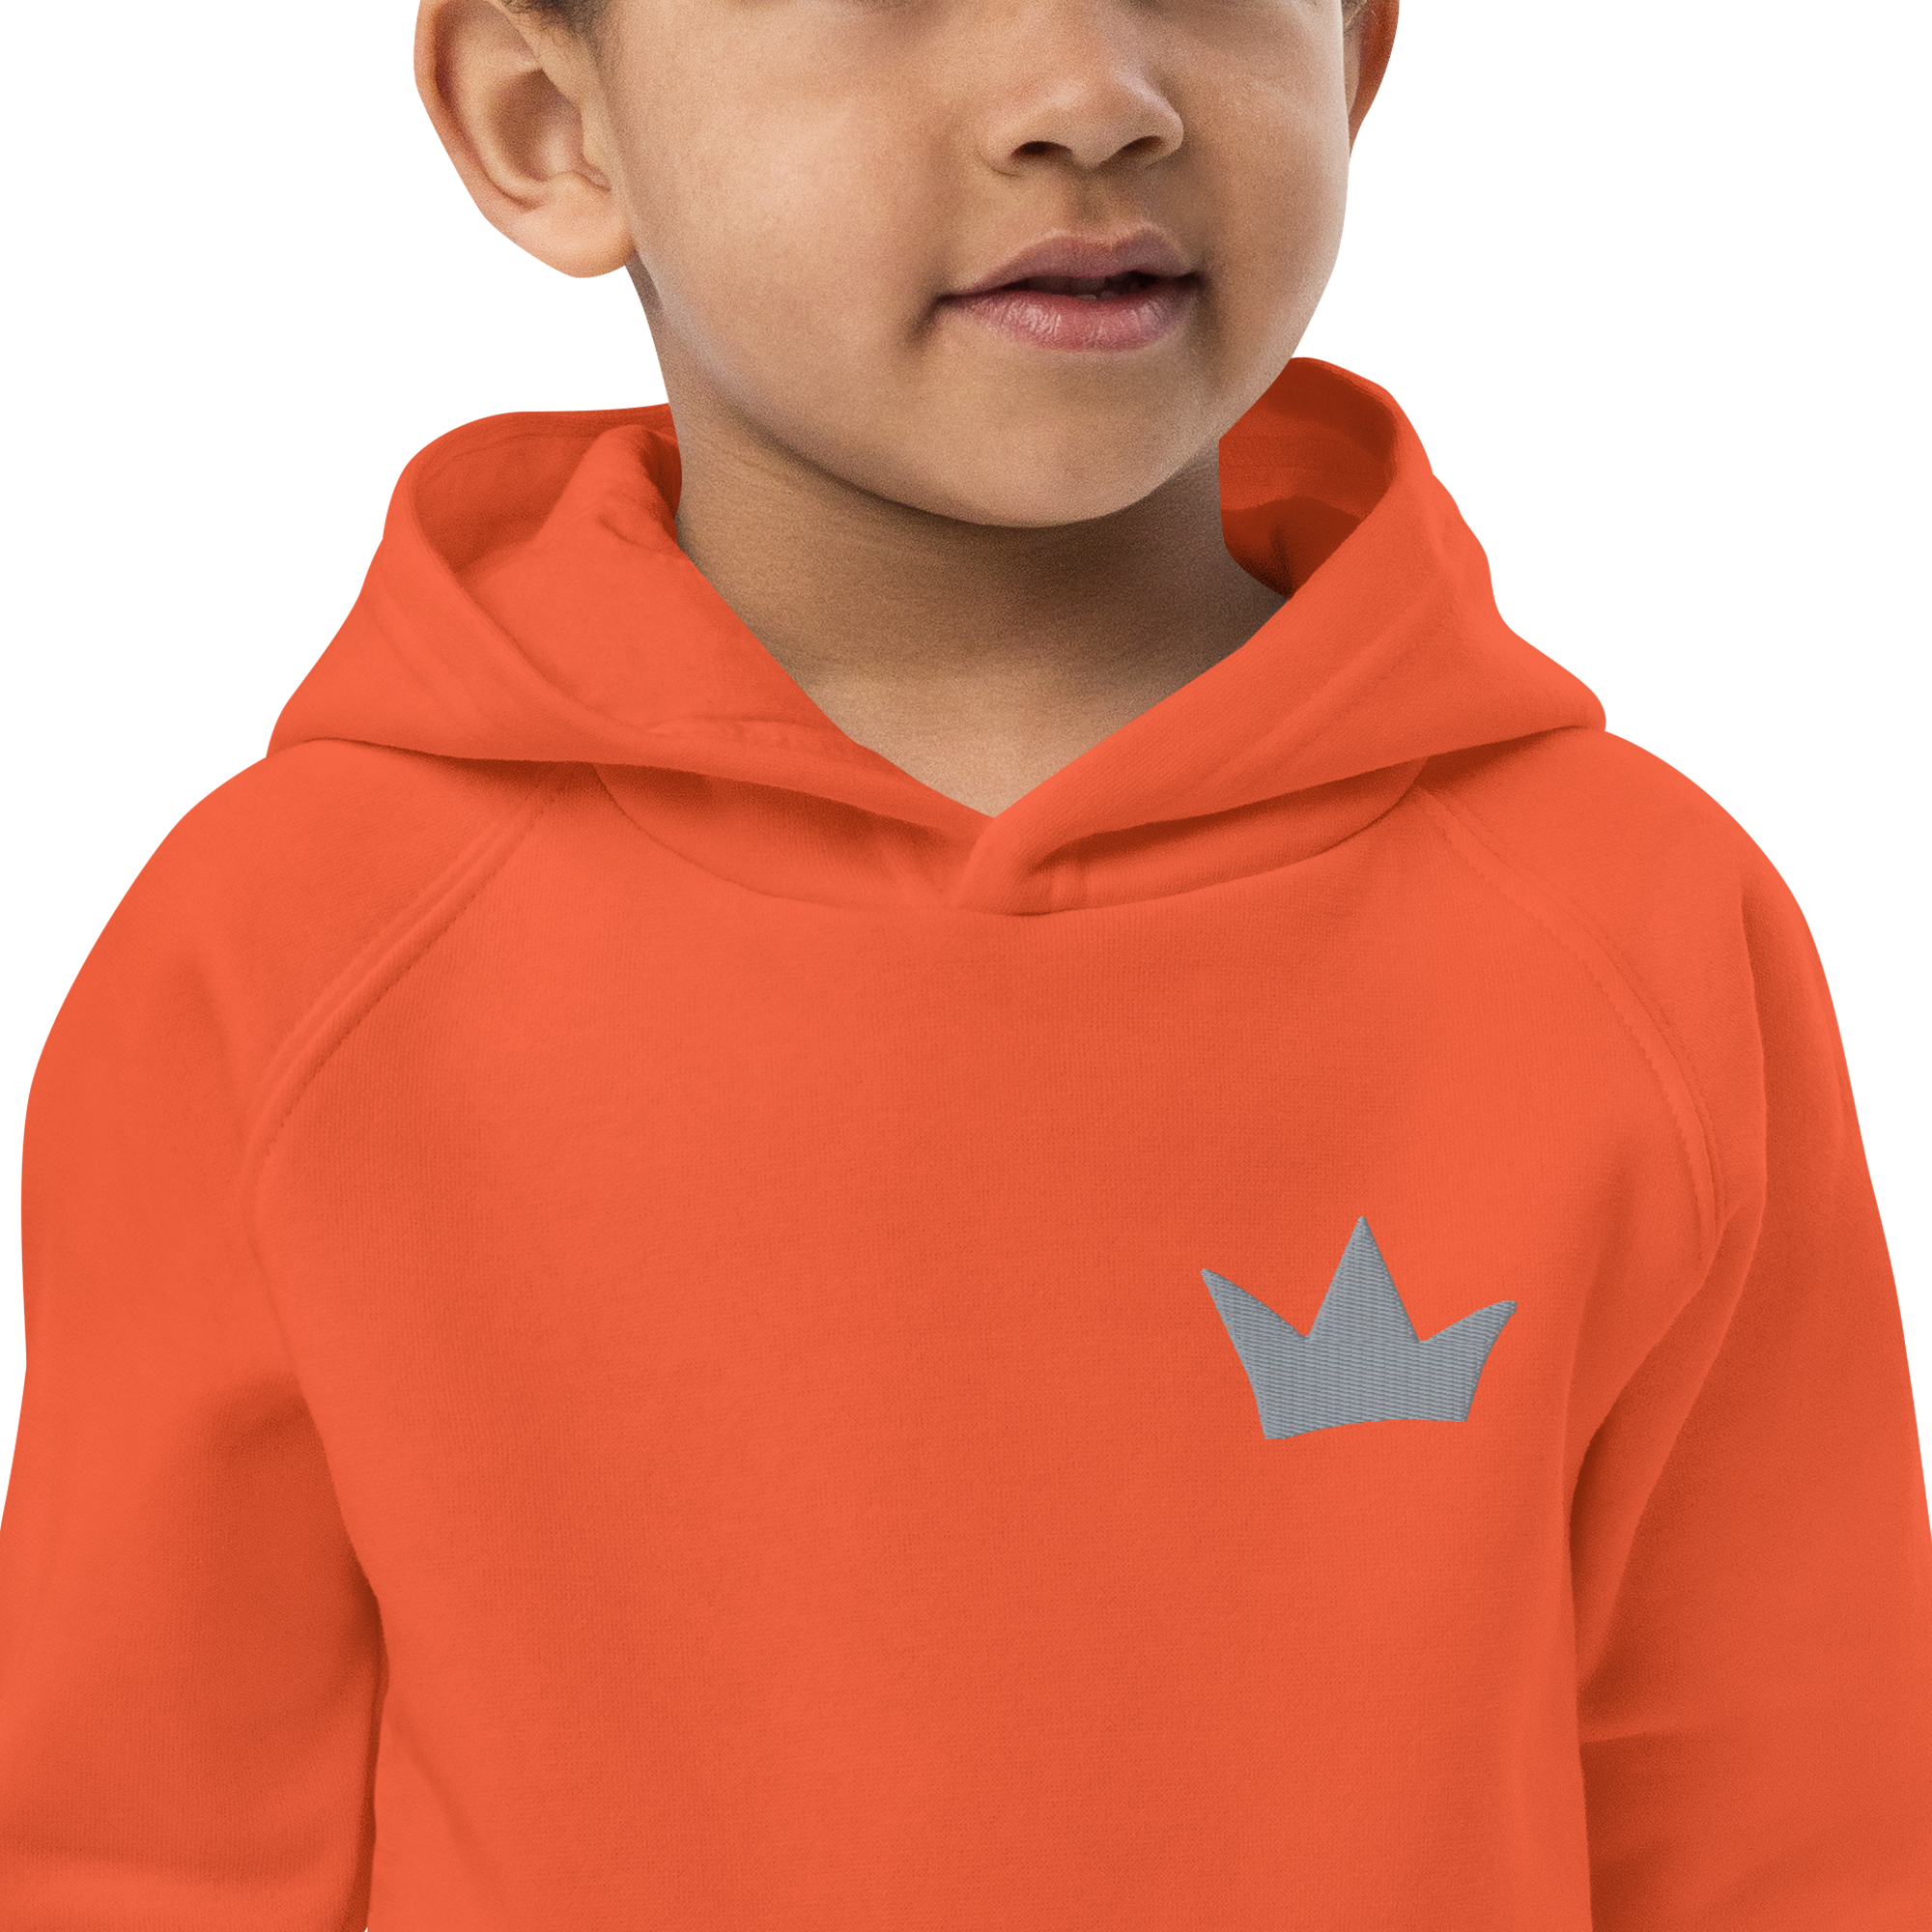 Crown embroidered kids eco hoodie